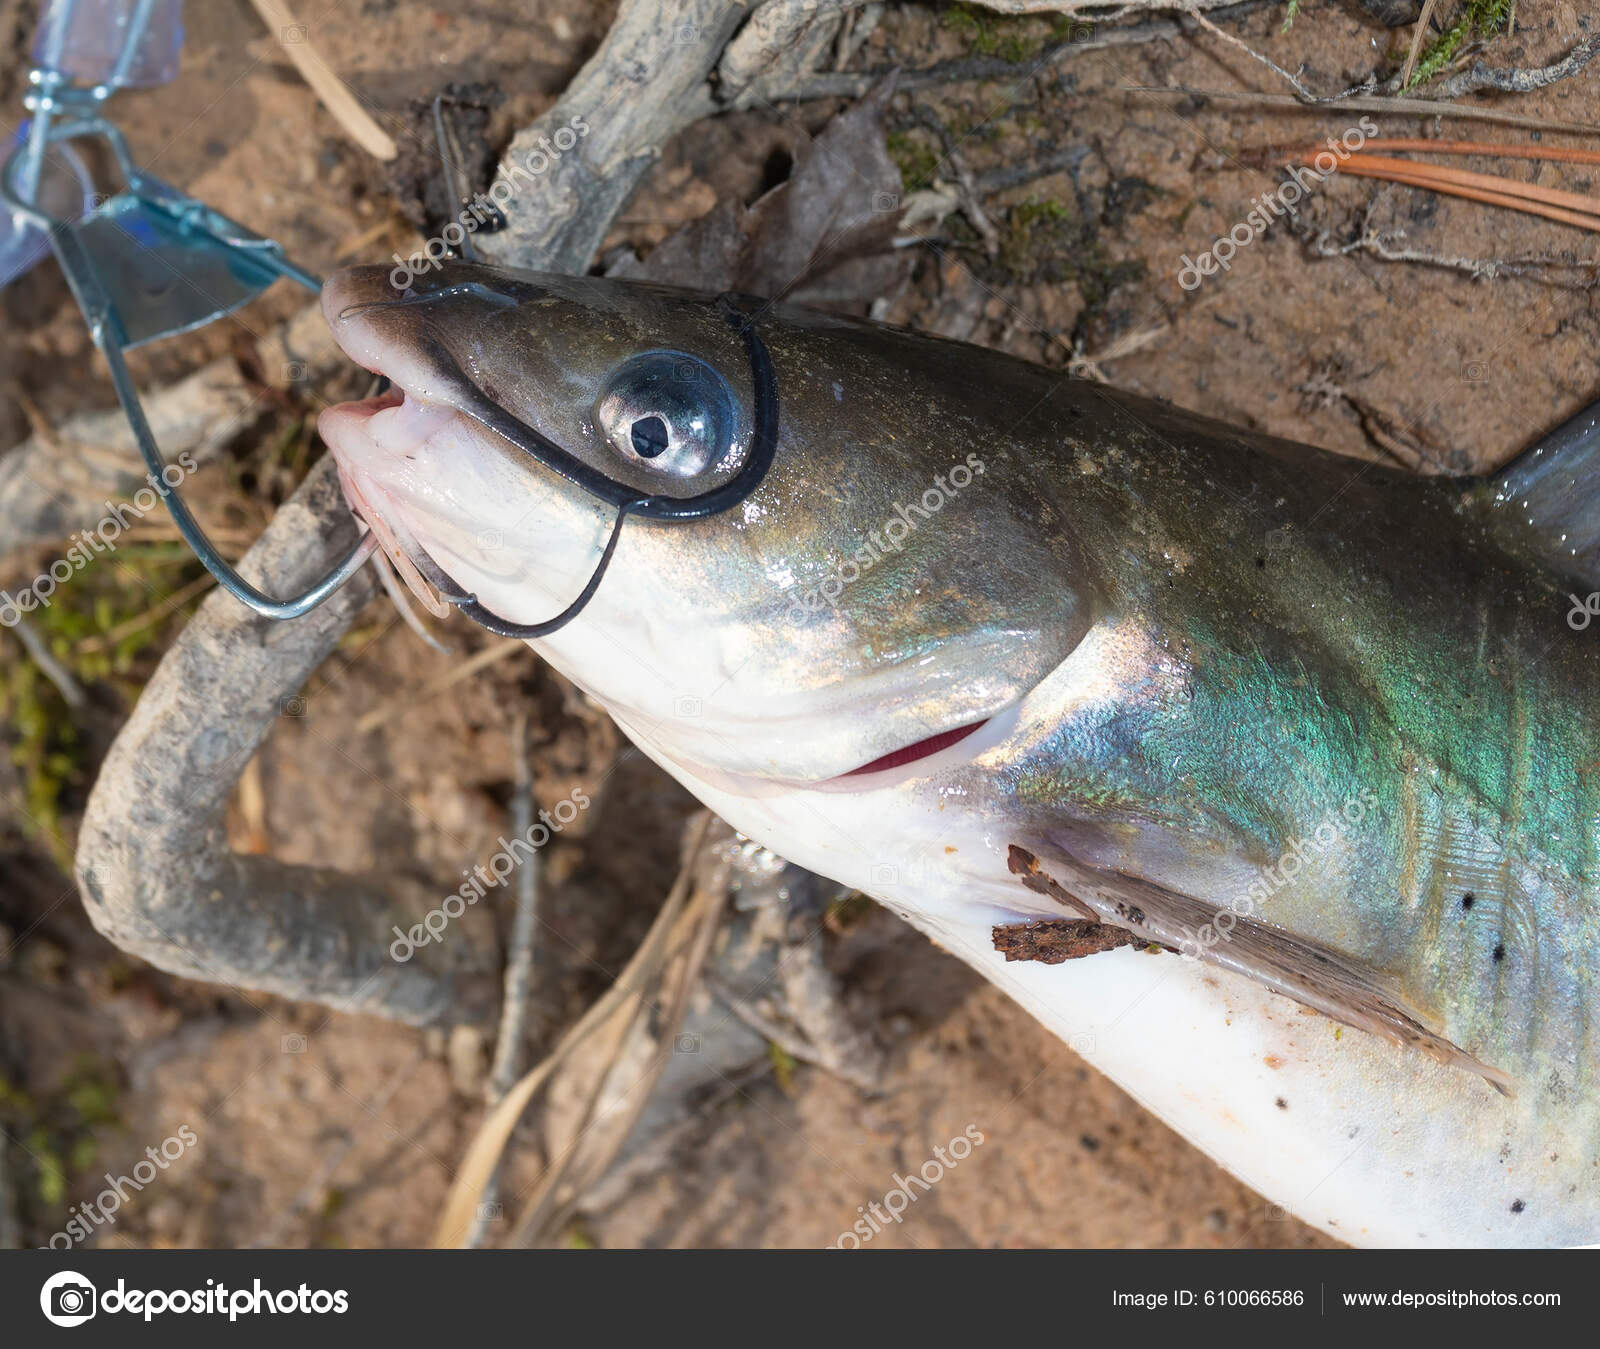 https://st.depositphotos.com/3504545/61006/i/1600/depositphotos_610066586-stock-photo-freshly-caught-catfish-metal-stringer.jpg